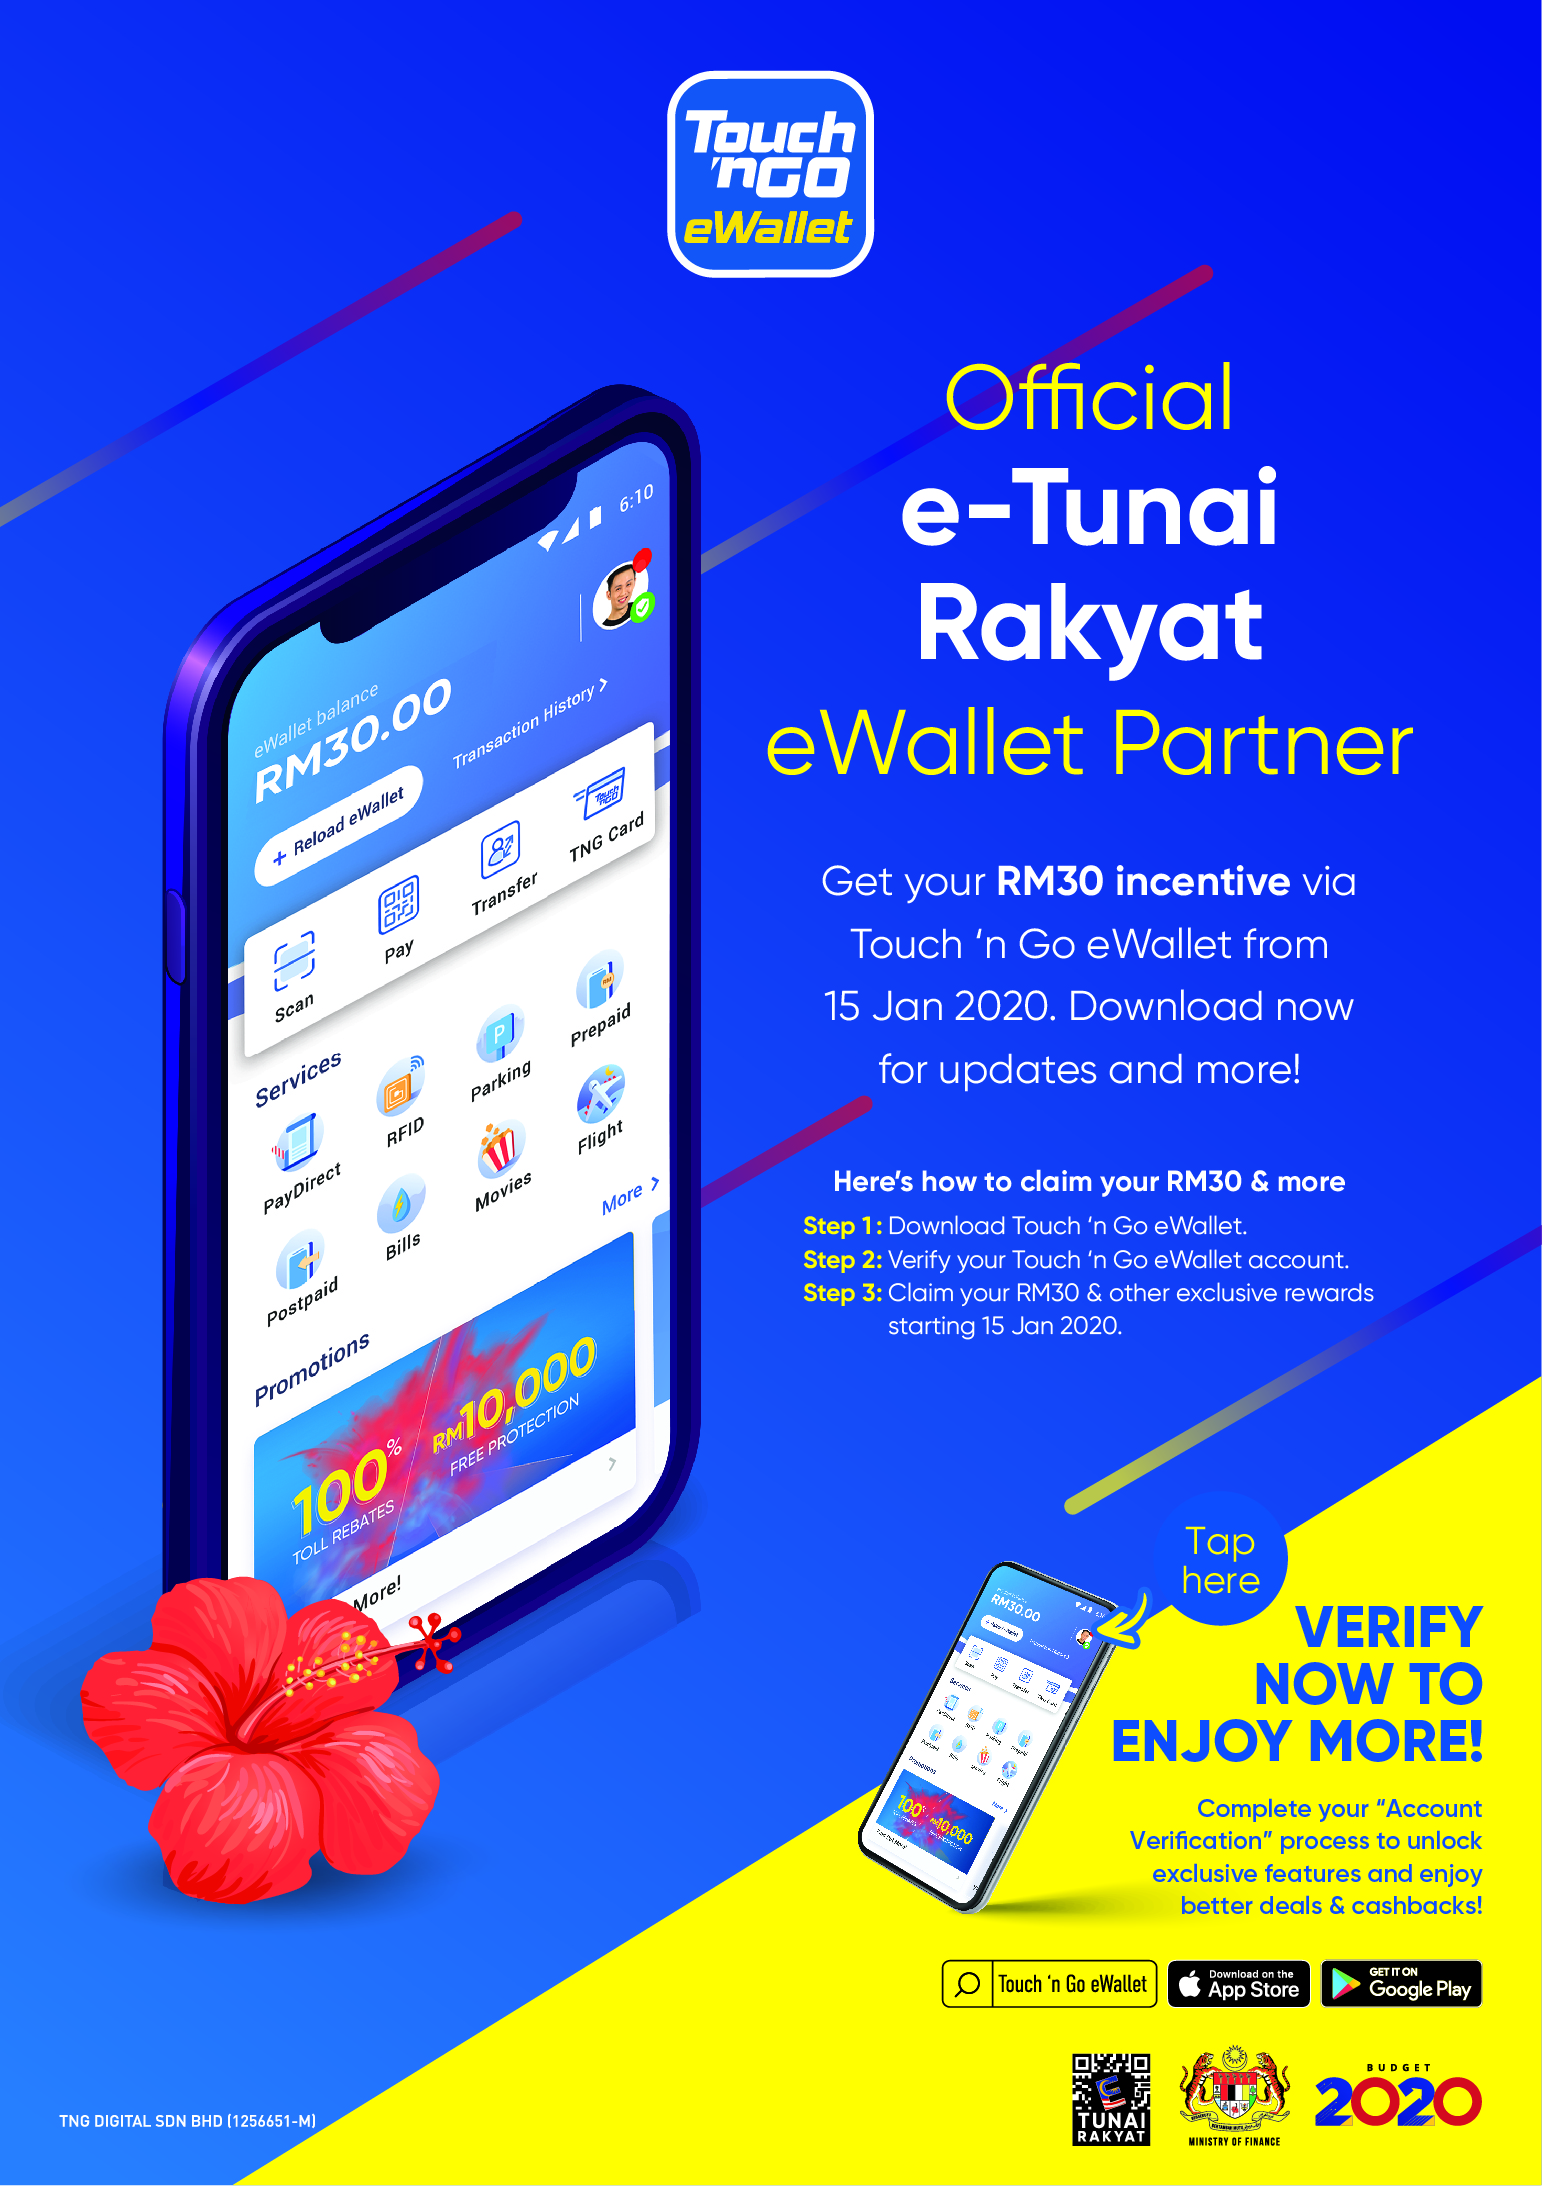 E-Tunai Rakyat: How-to redeem your RM30 eWallet credit